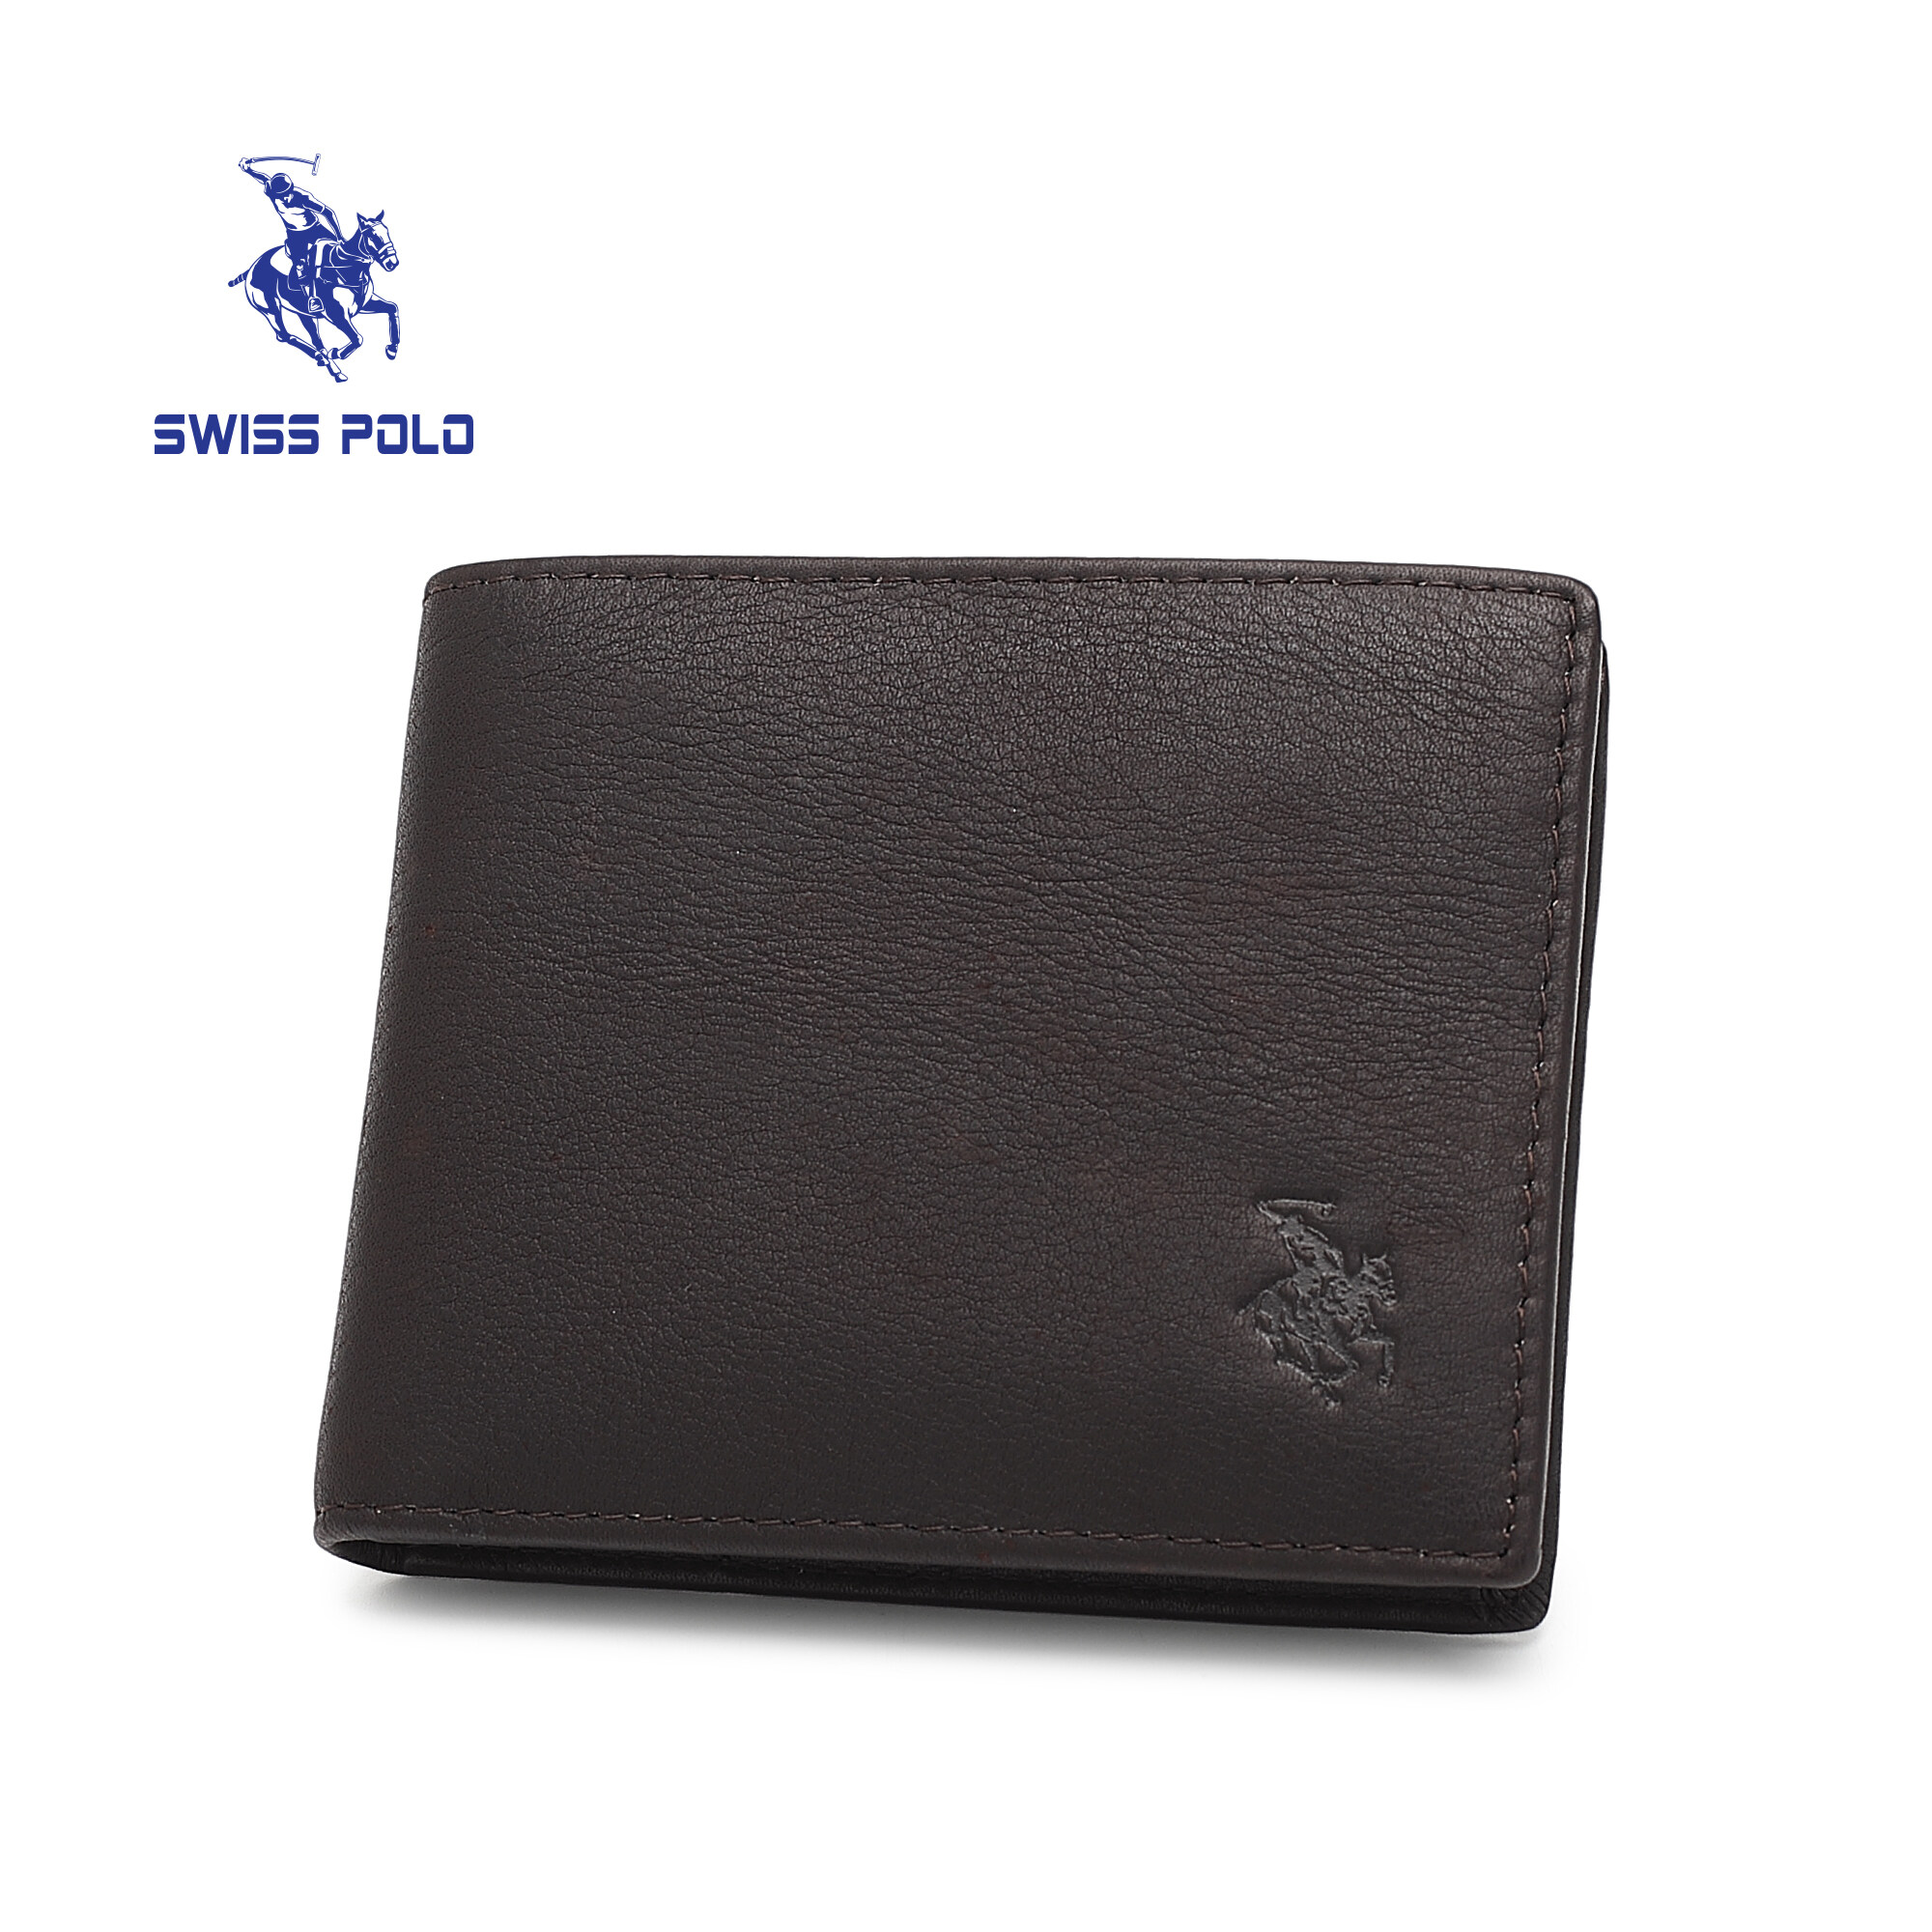 SWISS POLO Genuine Leather RFID Short Wallet SW 188-3 DARK BROWN